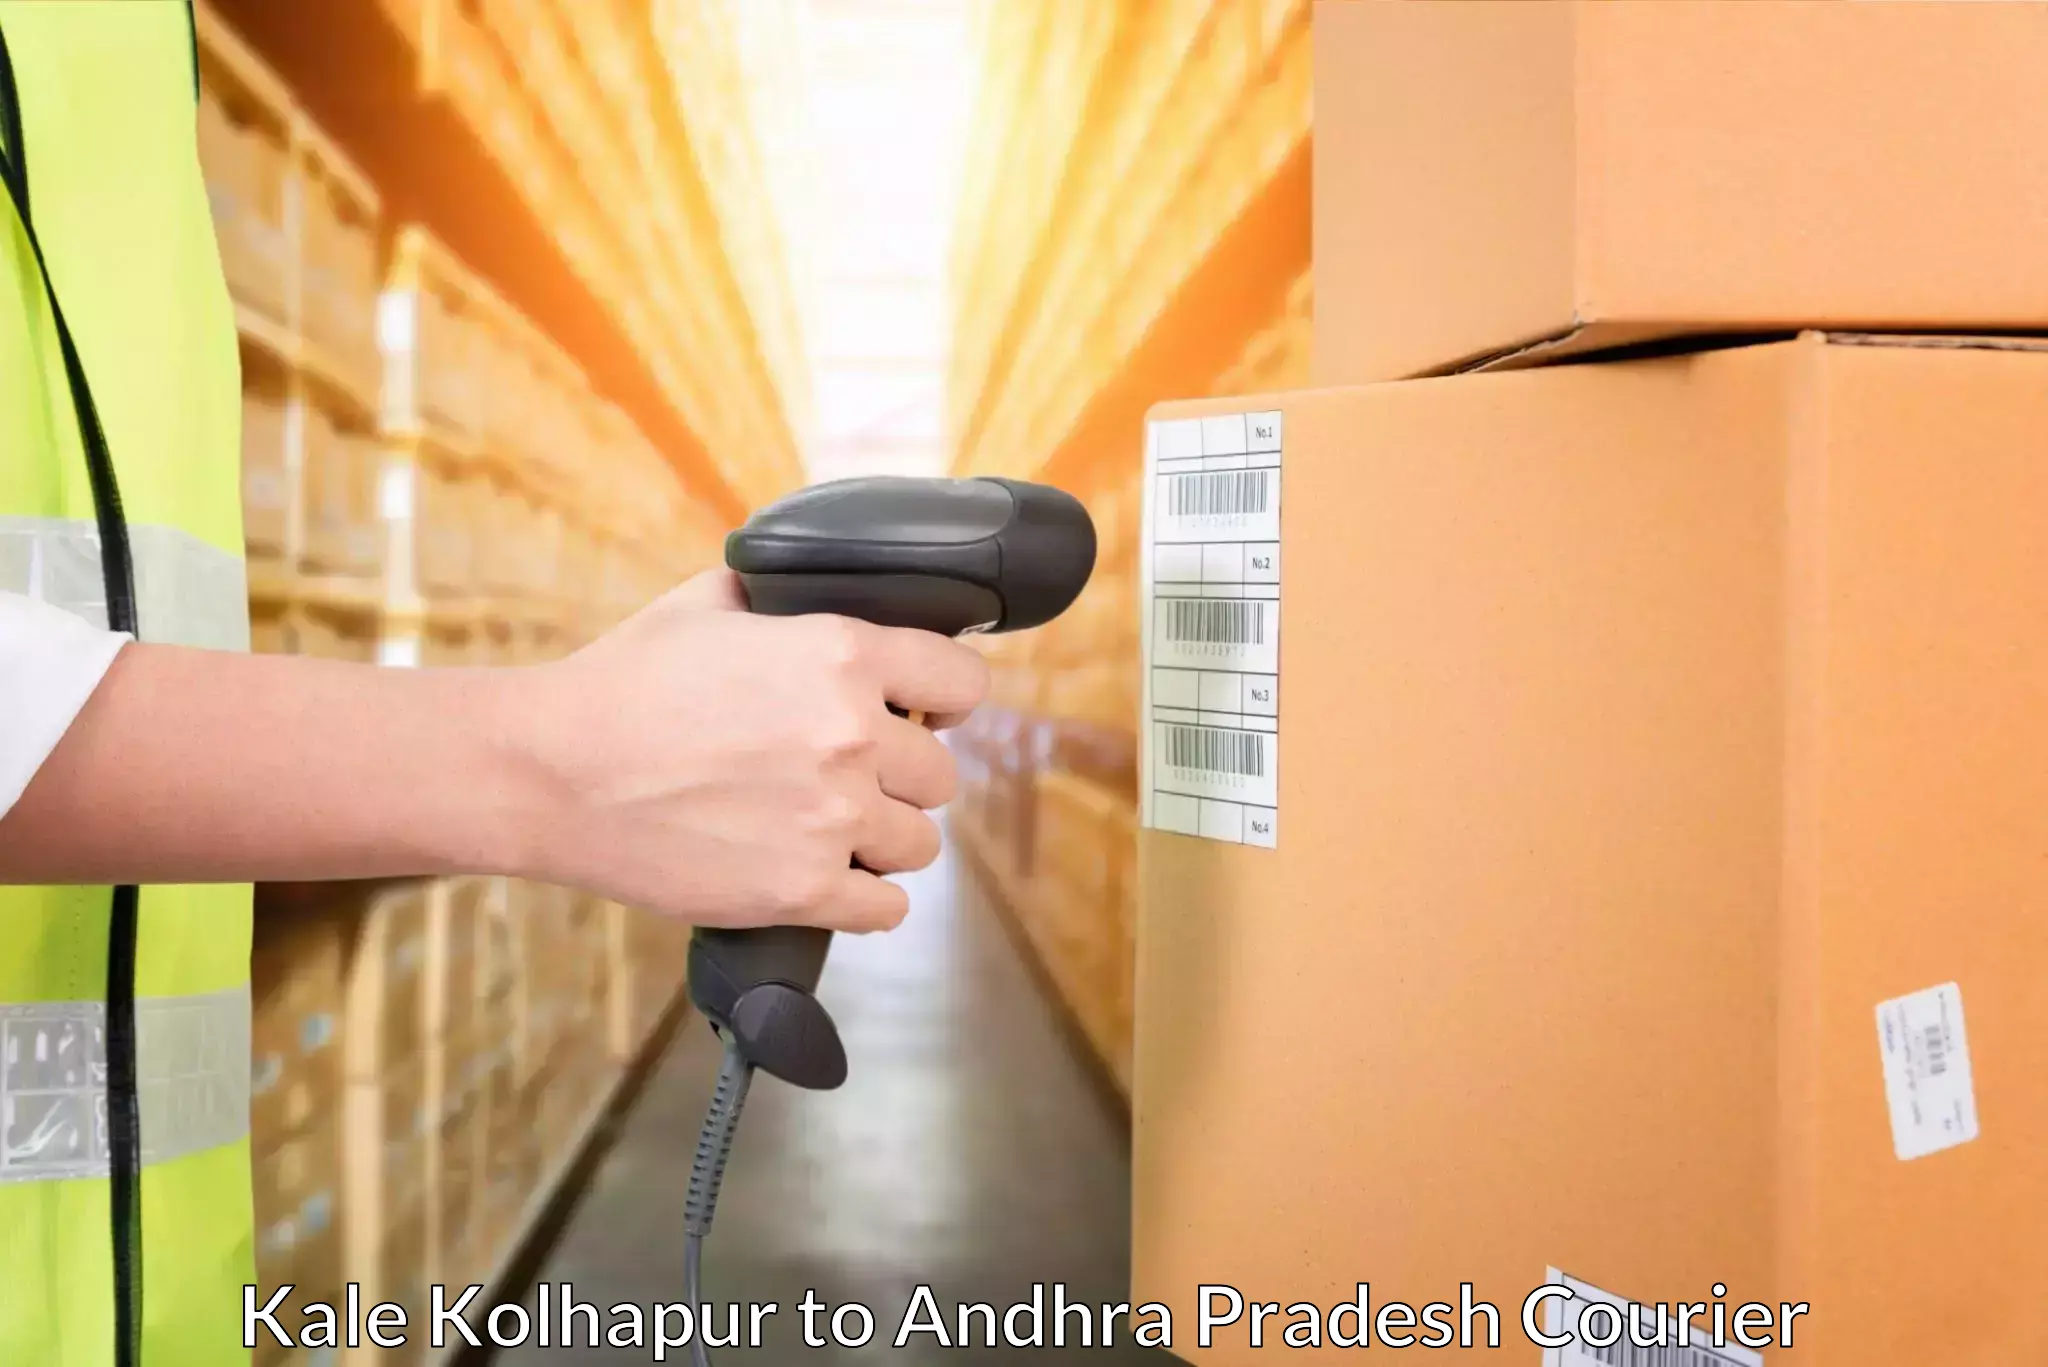 Courier service partnerships Kale Kolhapur to Andhra Pradesh